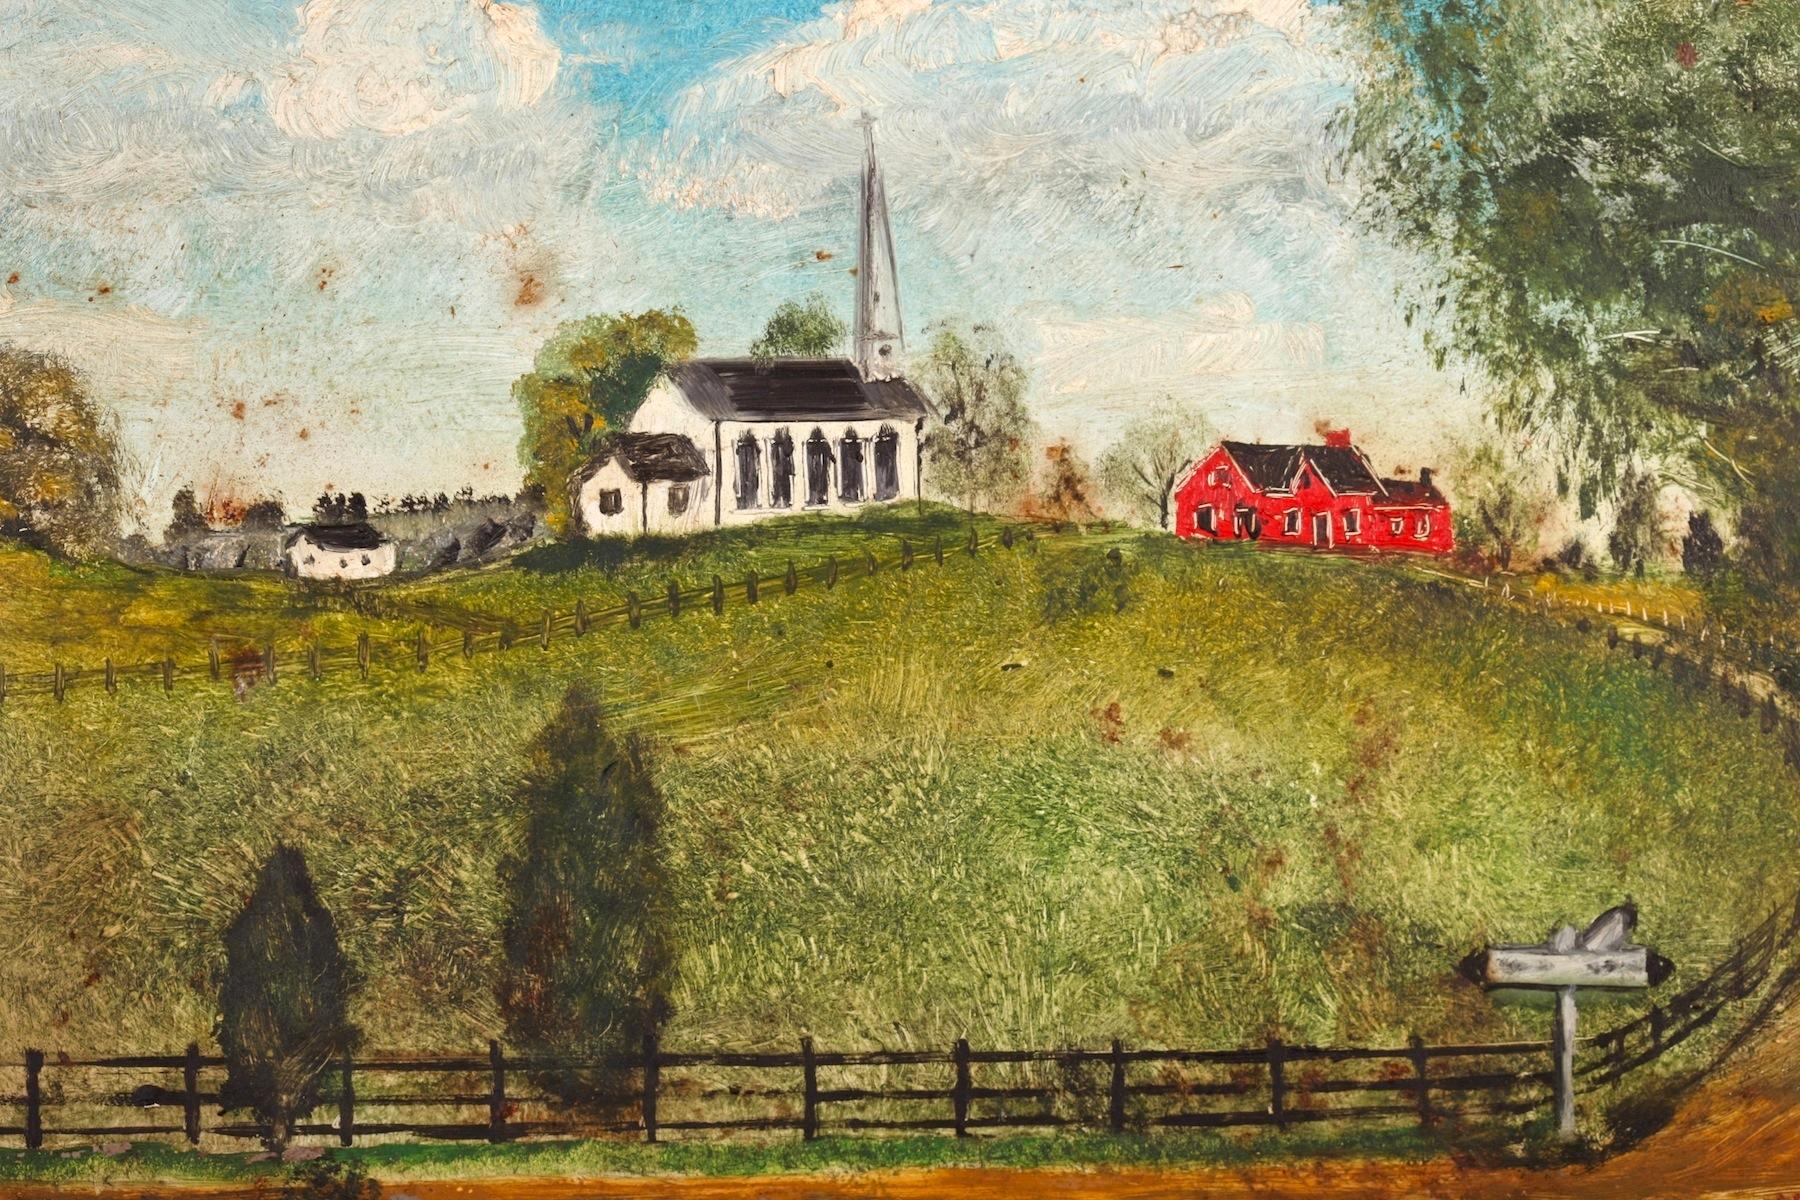 Fabulous Folk Art outsider art painting of a country Church by Pennsylvania artist E. G. Fahrenholtz (Elwood 